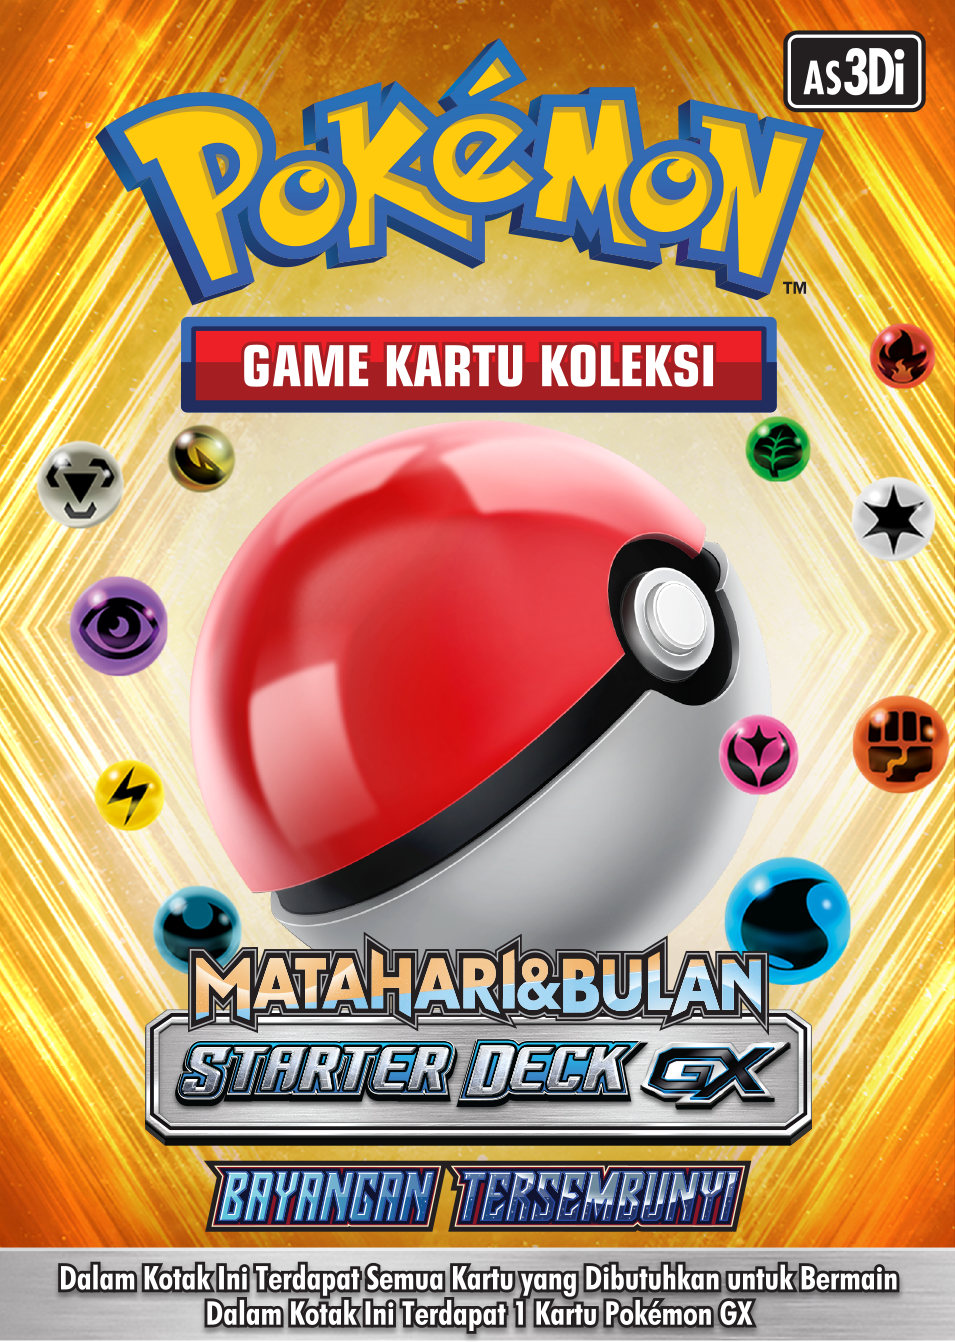 Mall of Indonesia Selenggarakan Kompetisi Pokémon Trade Game dan 
Pokémon GO PvP terbesar di Indonesia!